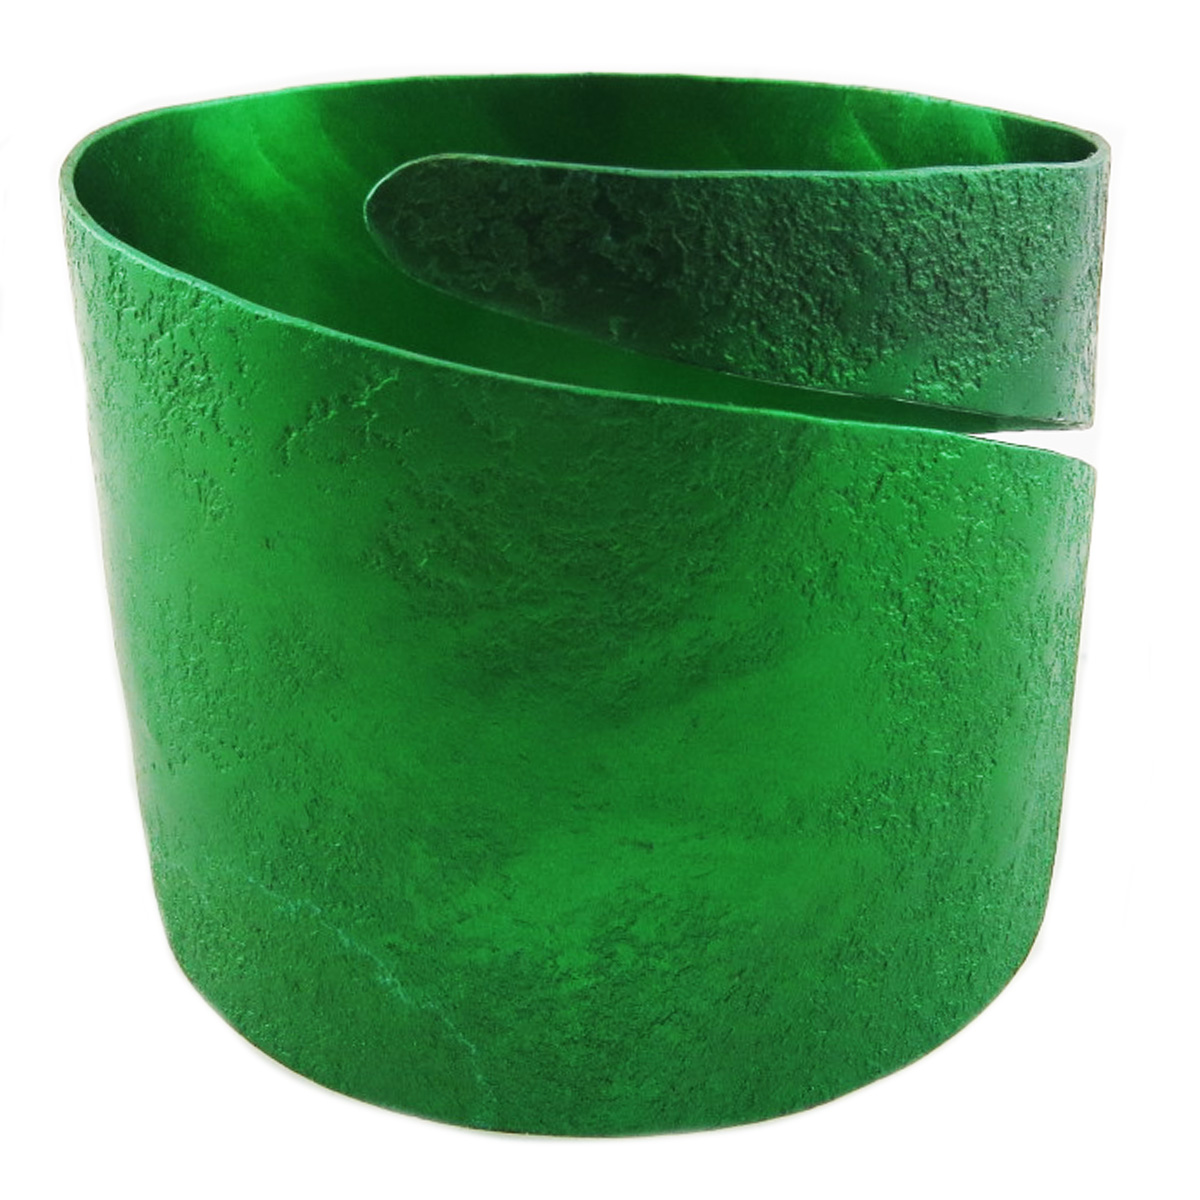 Bracelet artisanal \'Aluminirock\' vert - largeur 55 cm - [R1225]